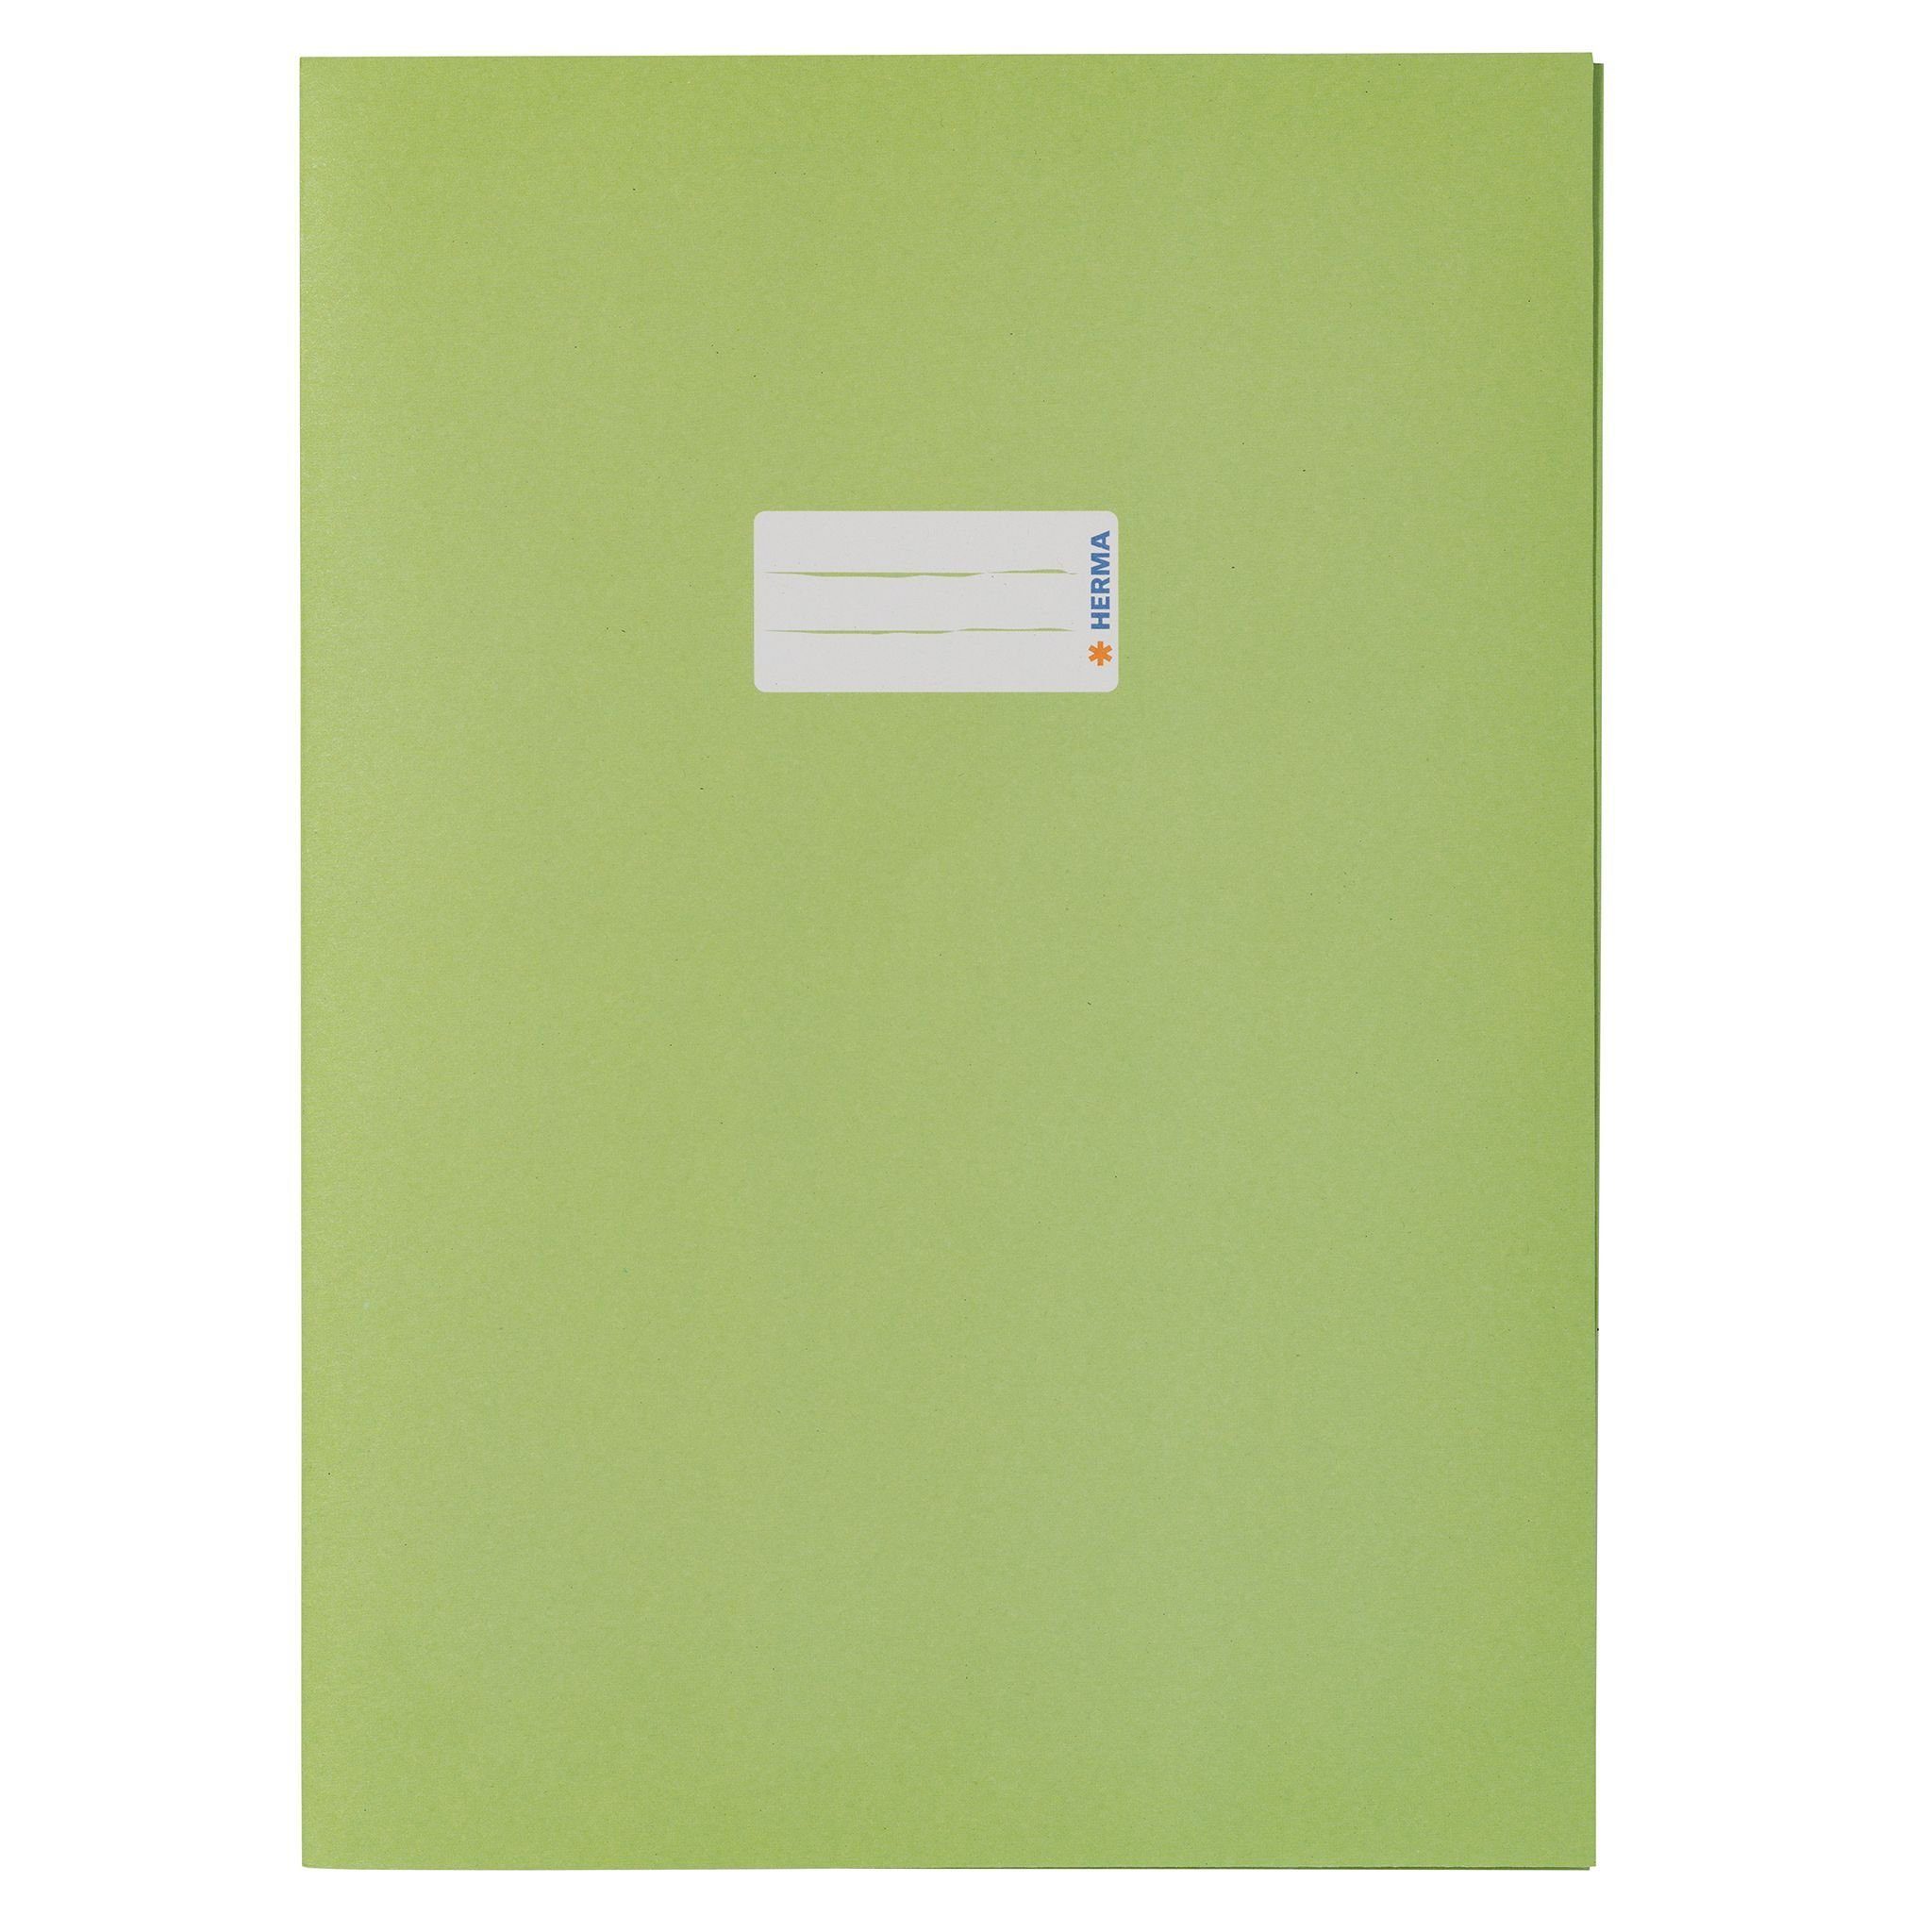 HERMA Druckerpapier HERMA Heftschoner, DIN A4, aus Papier, grasgrün